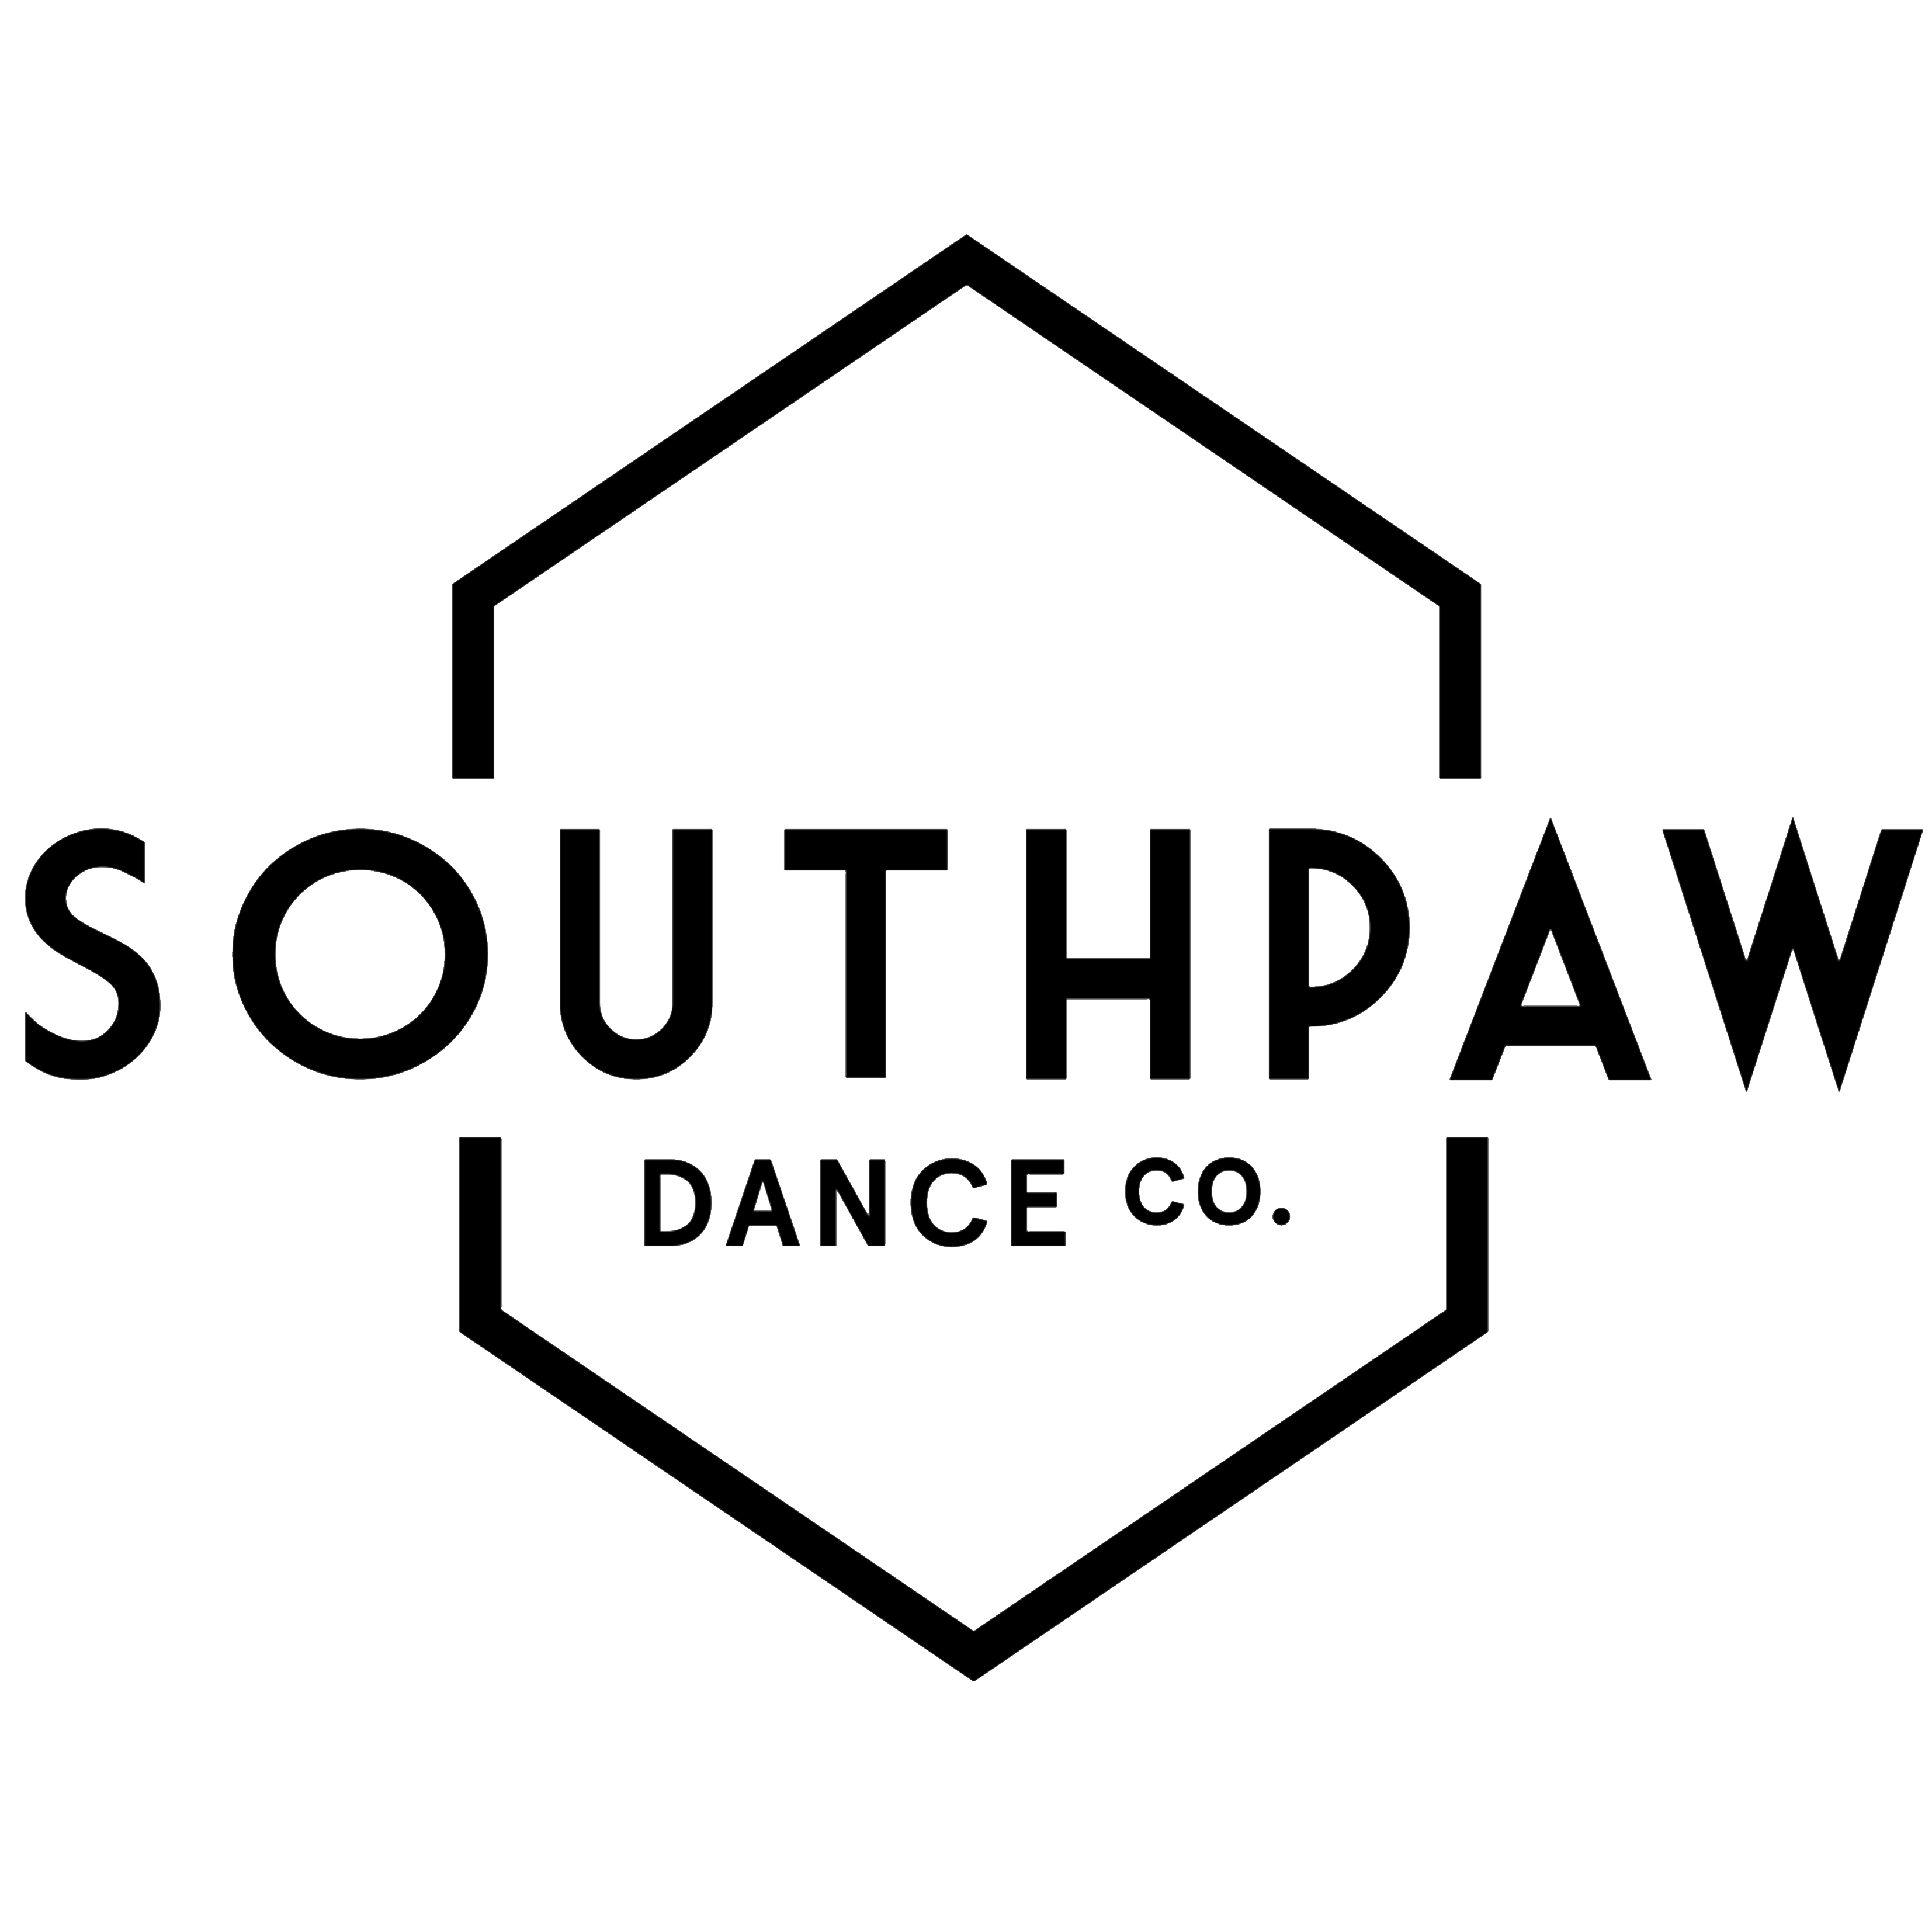 SOUTHPAW DANCE COMPANY